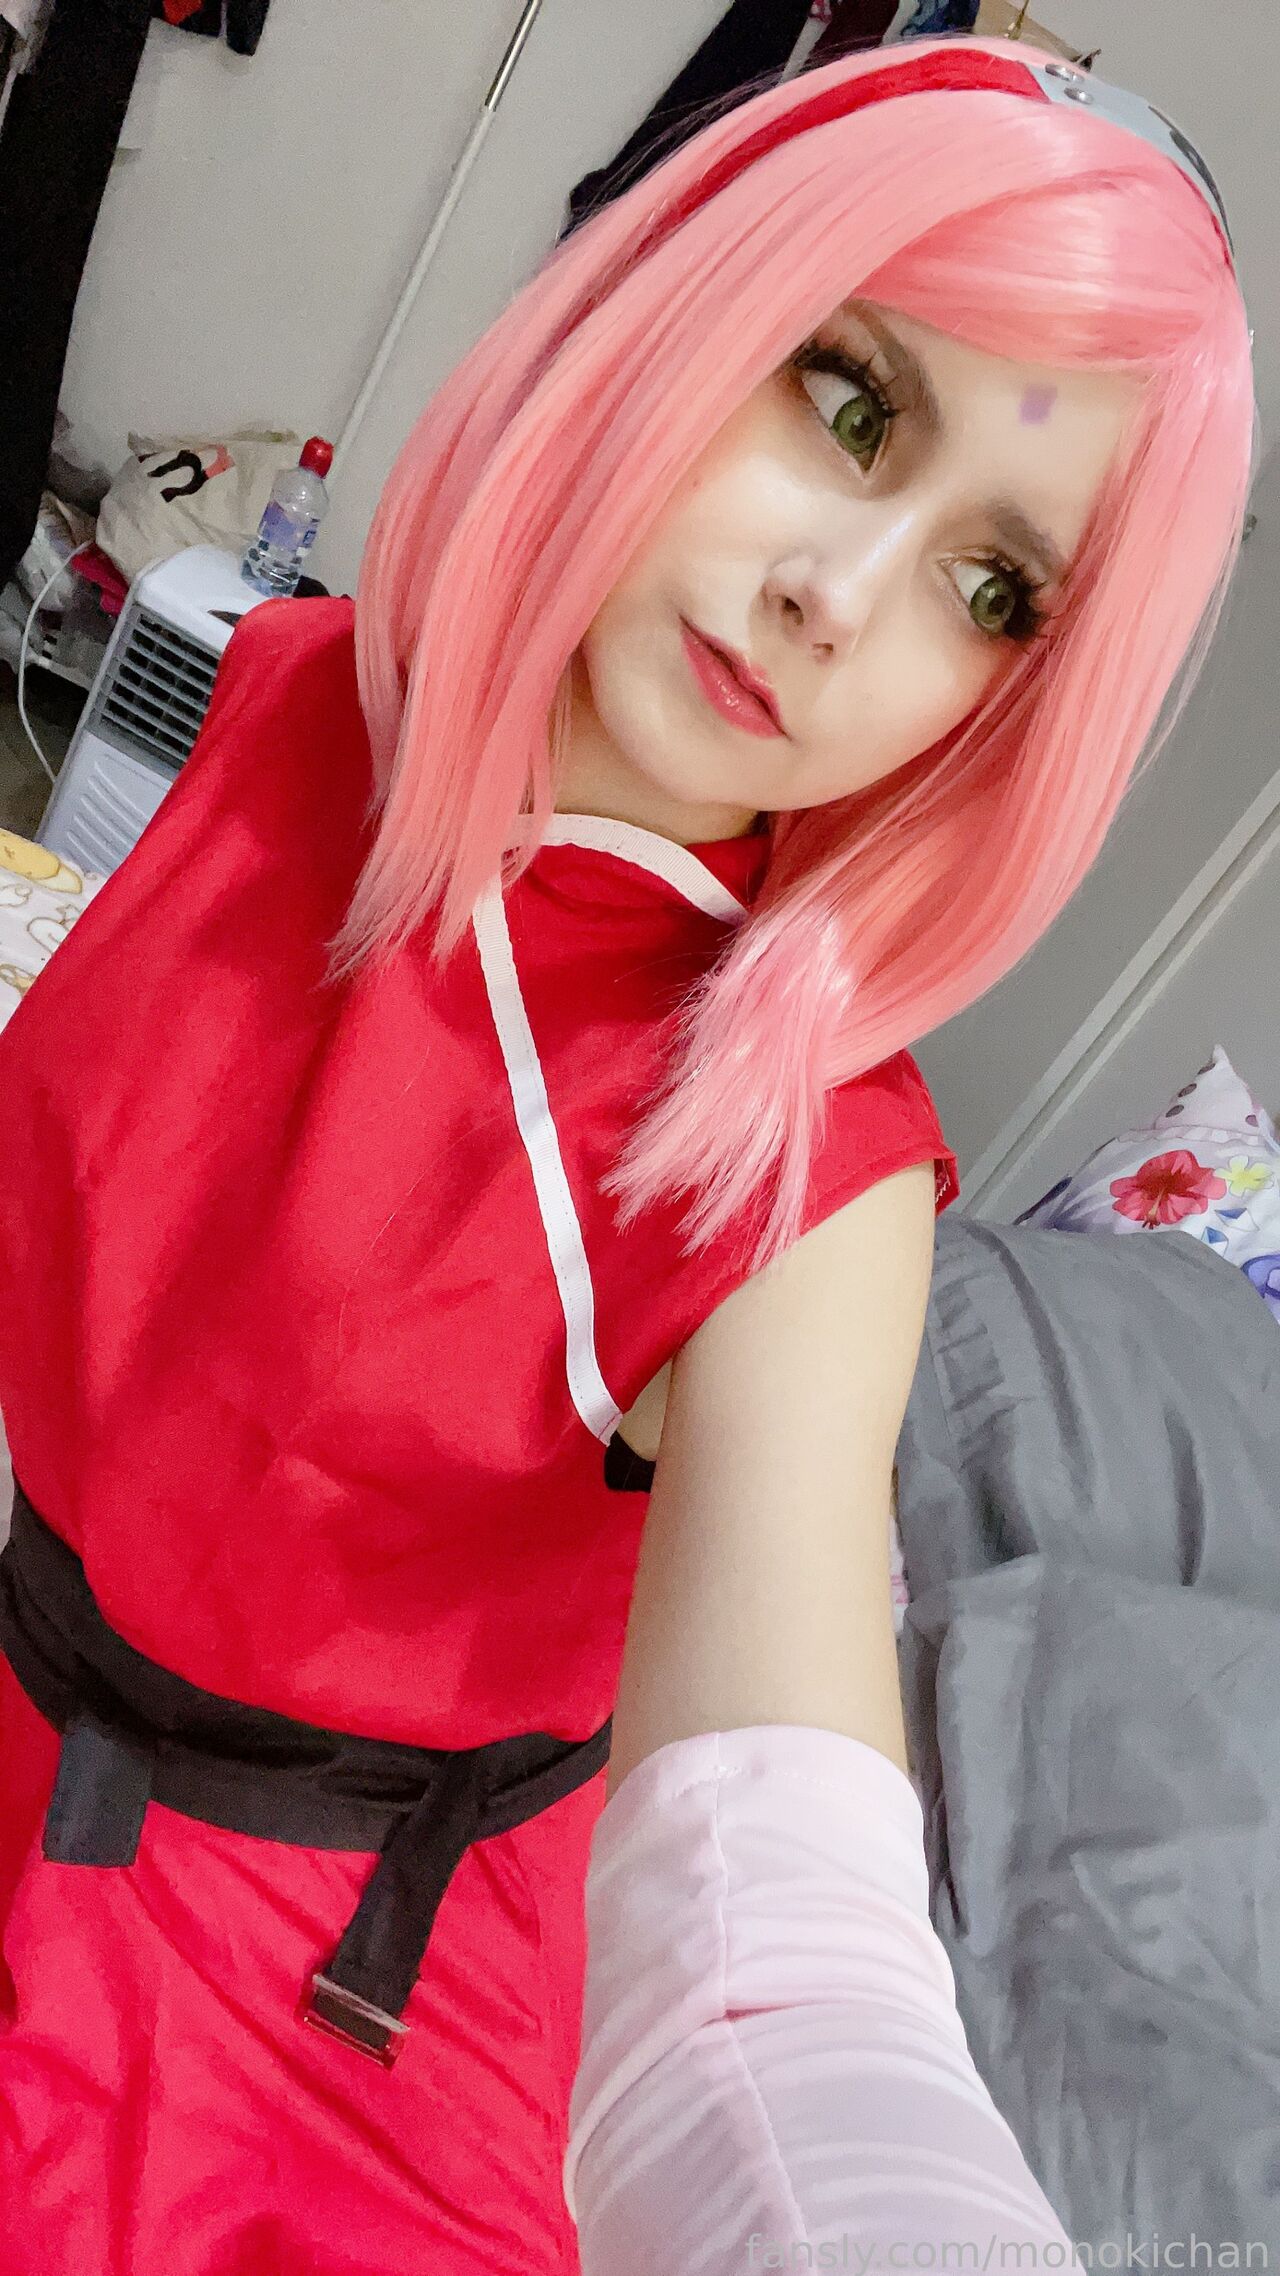 Monoki Chan – Sakura Haruno (Selfie Set)